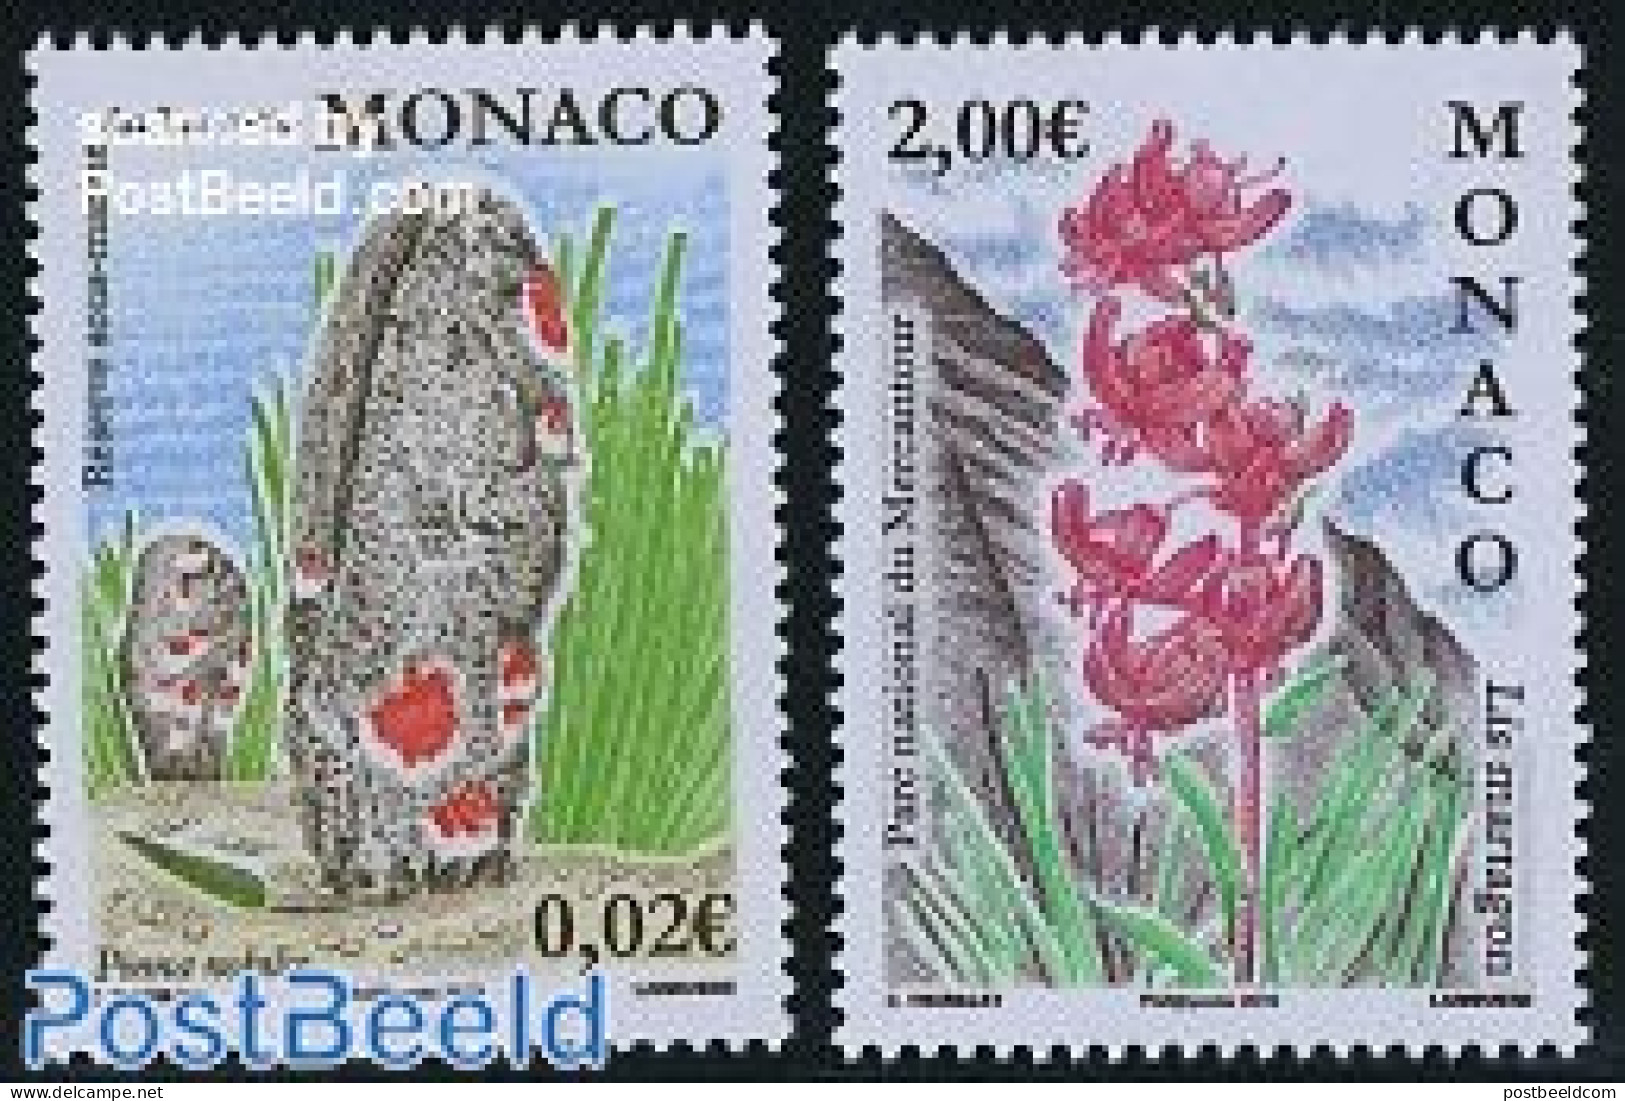 Monaco 2010 Definitives 2v (Pinna Nobilis & Lis Martagon), Mint NH, Nature - Flowers & Plants - Shells & Crustaceans - Unused Stamps